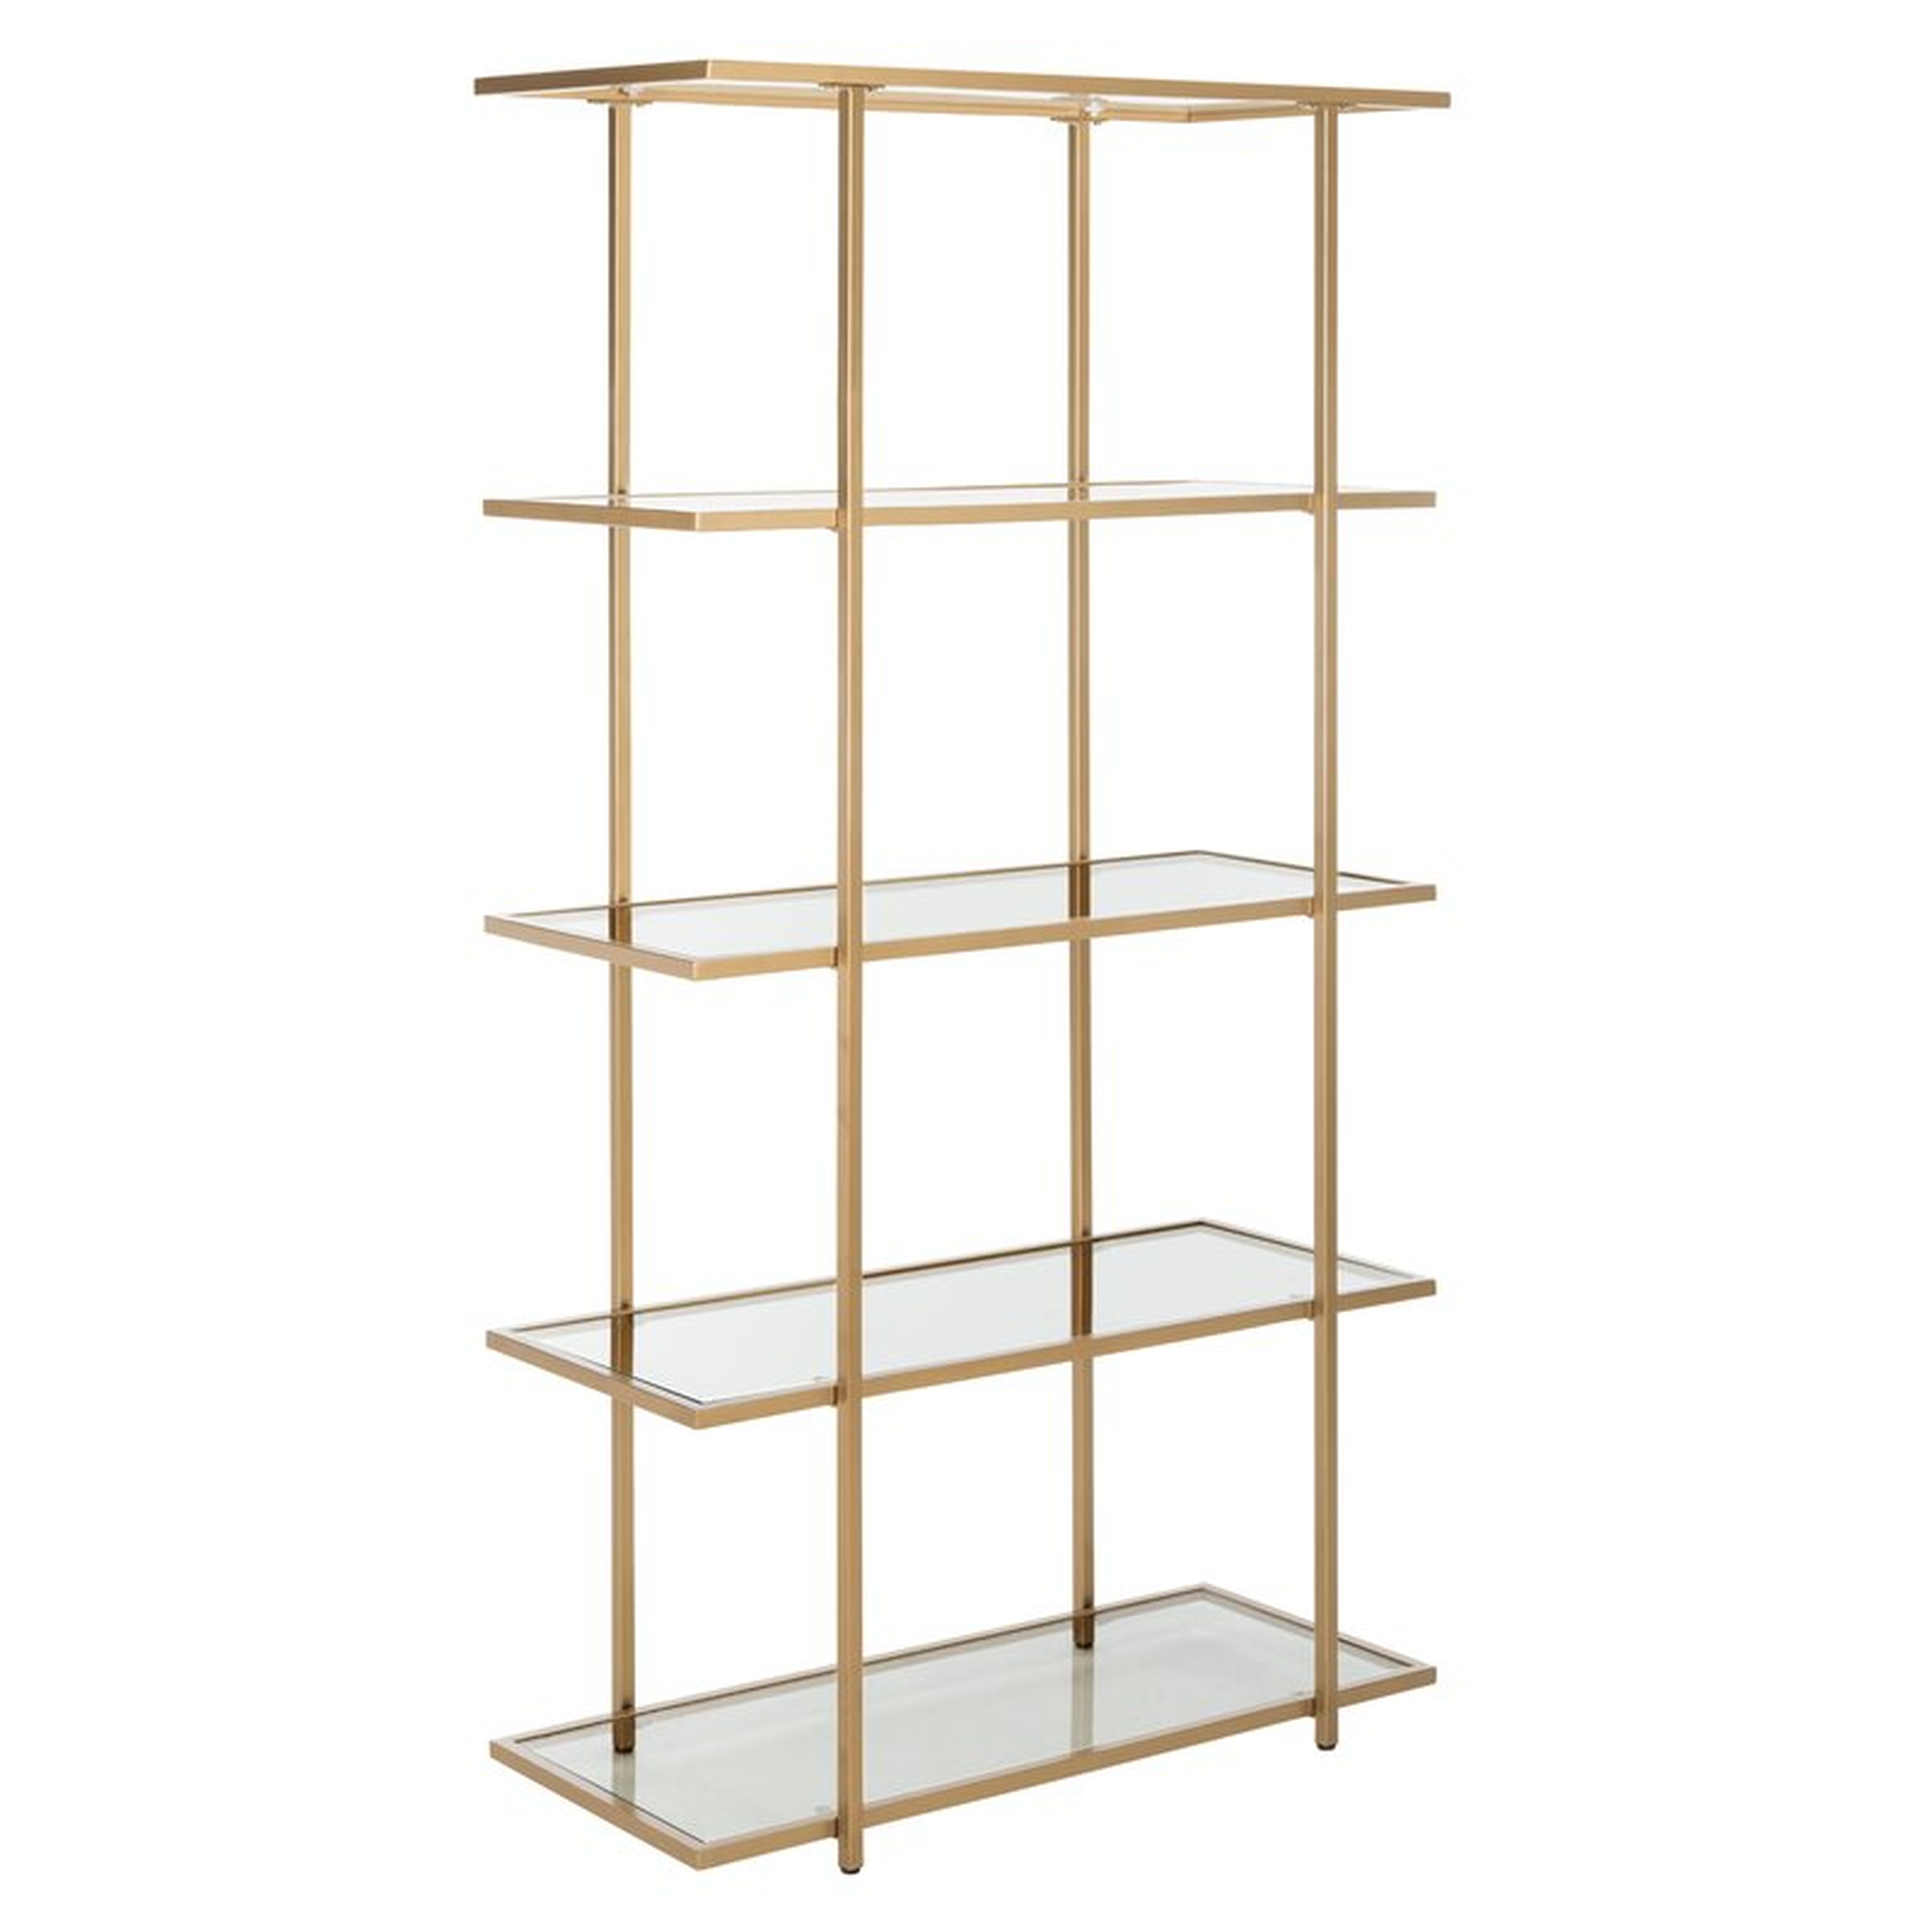 Francis 5-Tier Etagere Bookcase Color (Body/Shelves): Gold/Clear - Perigold